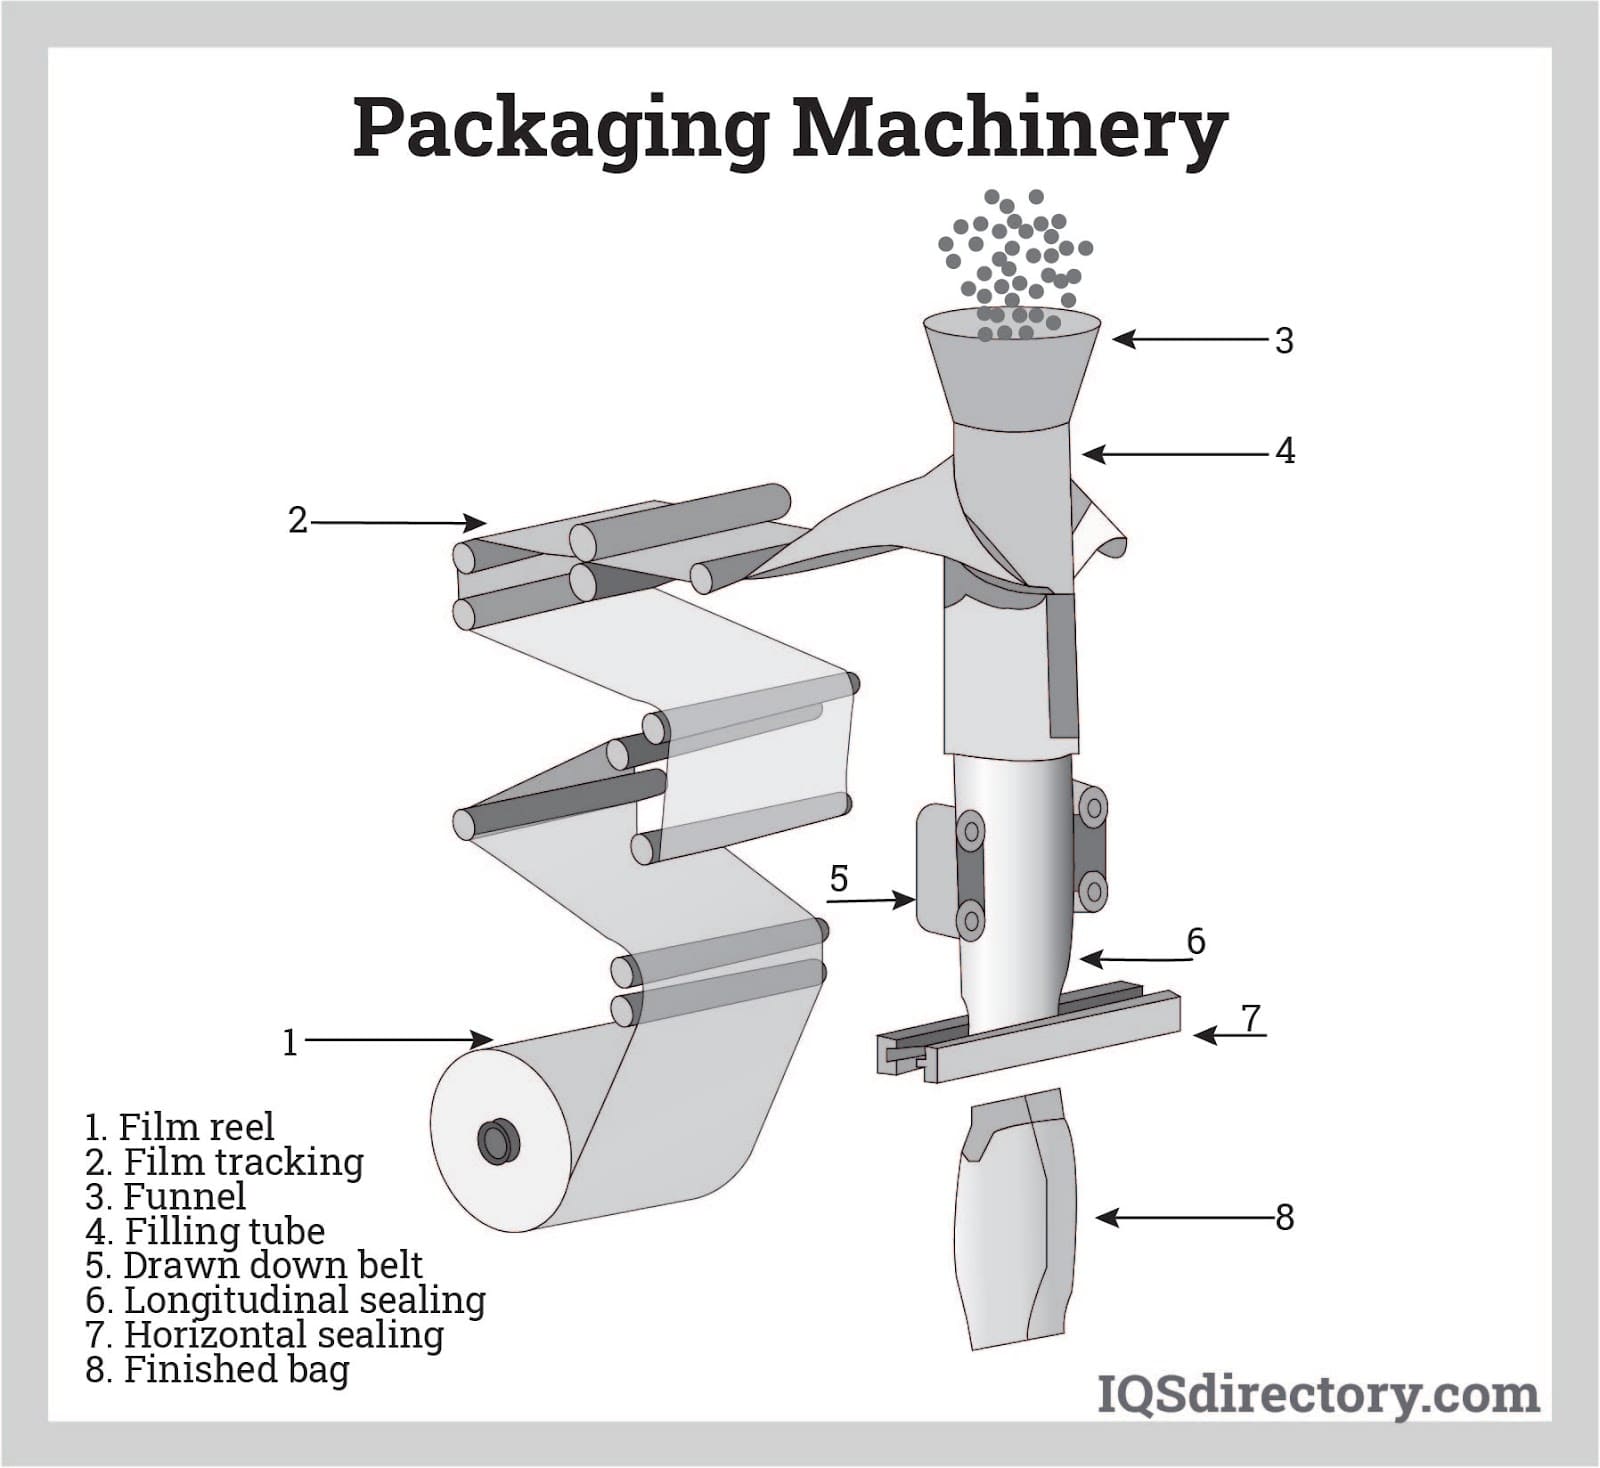 https://www.iqsdirectory.com/articles/packaging-equipment/packaging-machinery.jpg